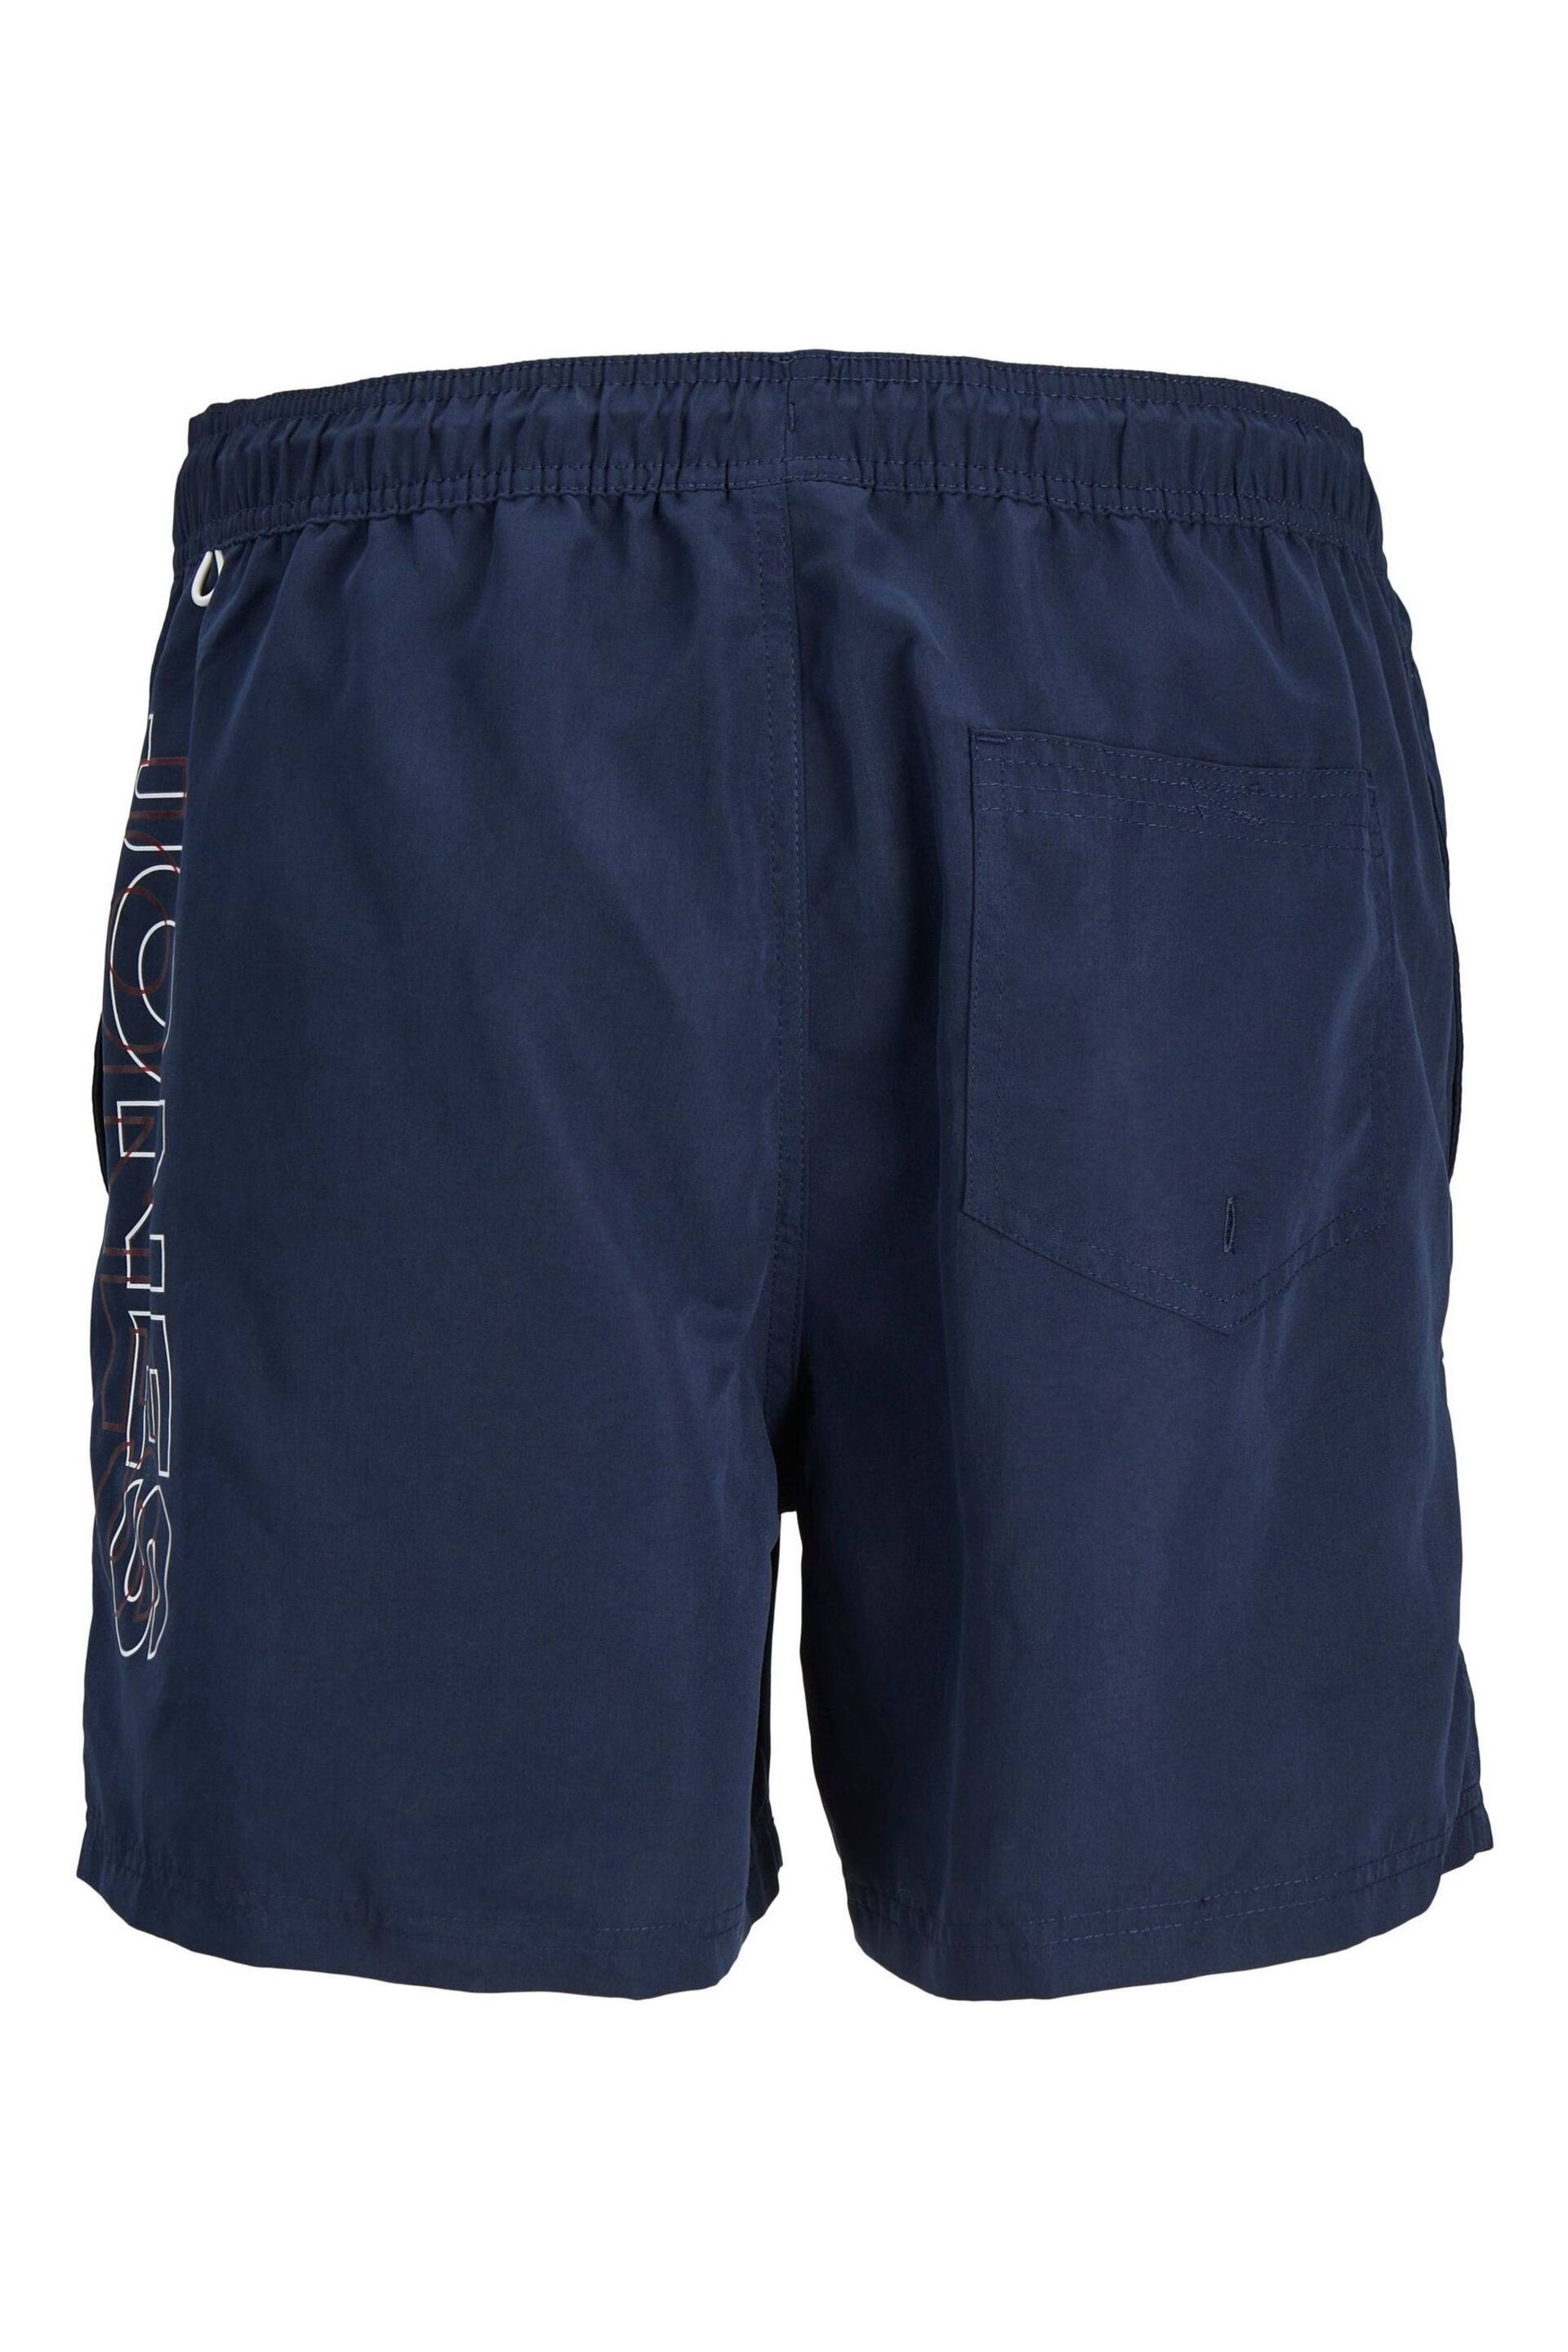 JACK & JONES Navy Blue Swim Shorts With Contrast Lining - Image 8 of 8